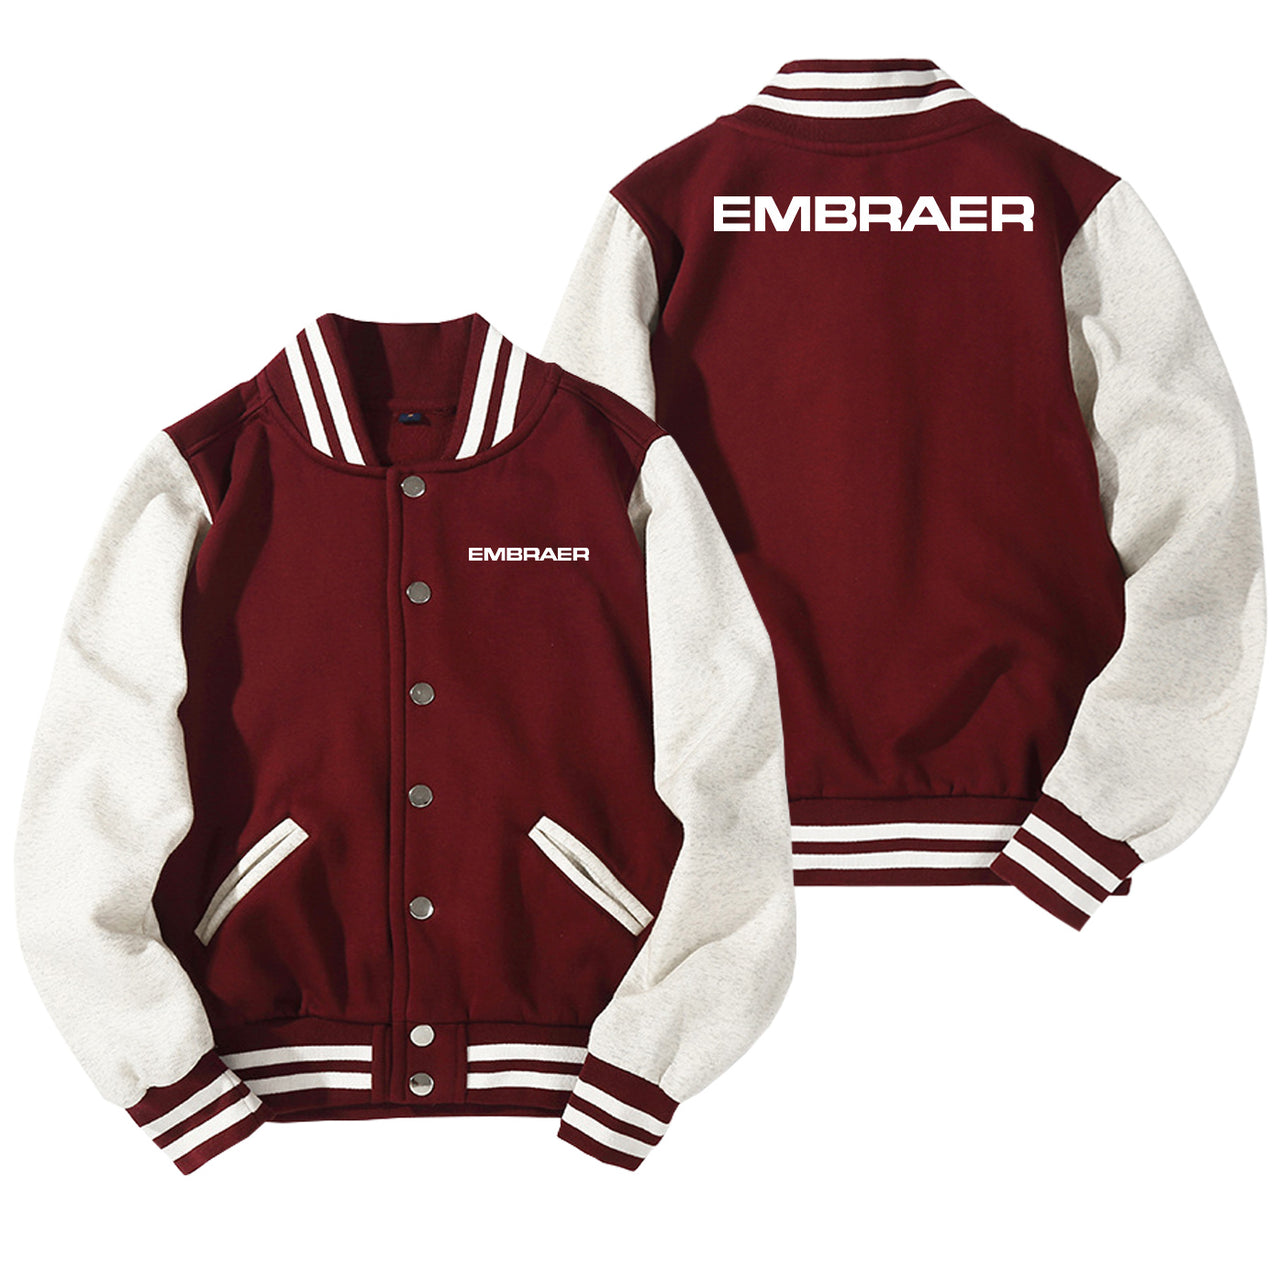 Embraer & Text Designed Baseball Style Jackets